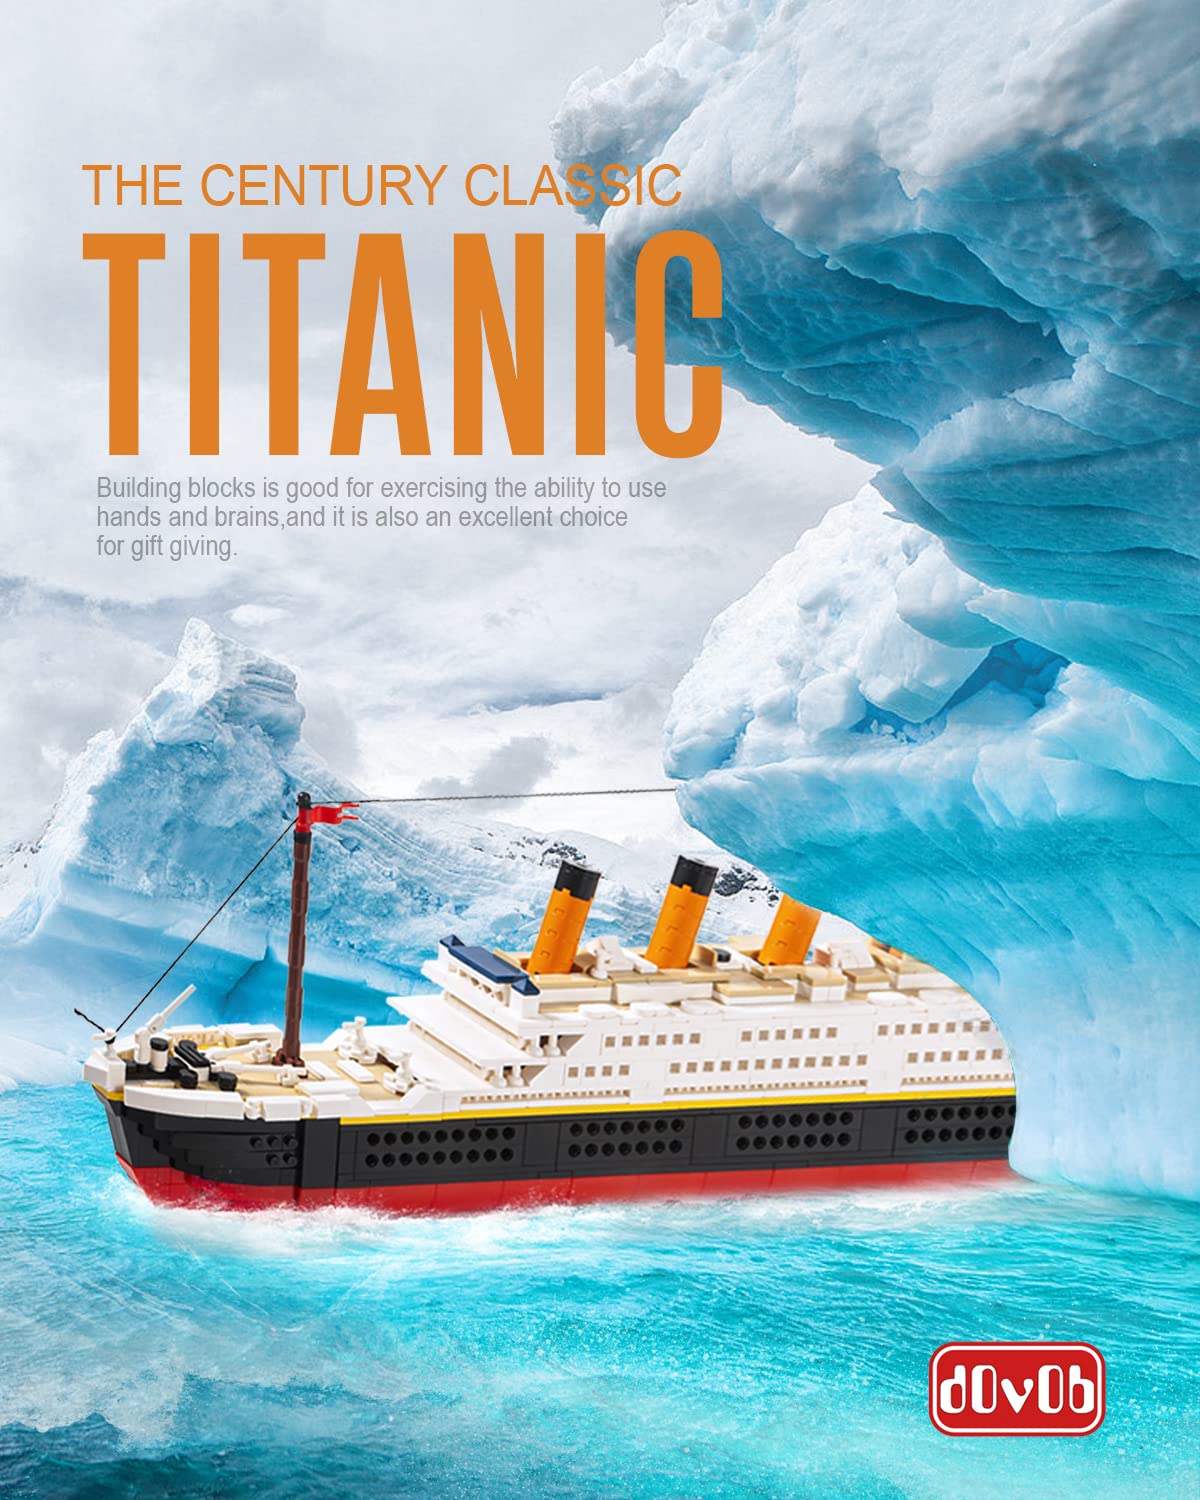 dOvOb Mini Blocks Titanic Building Set, 1288 Pieces Mini Bricks, Toys Gift for Adults and Kids